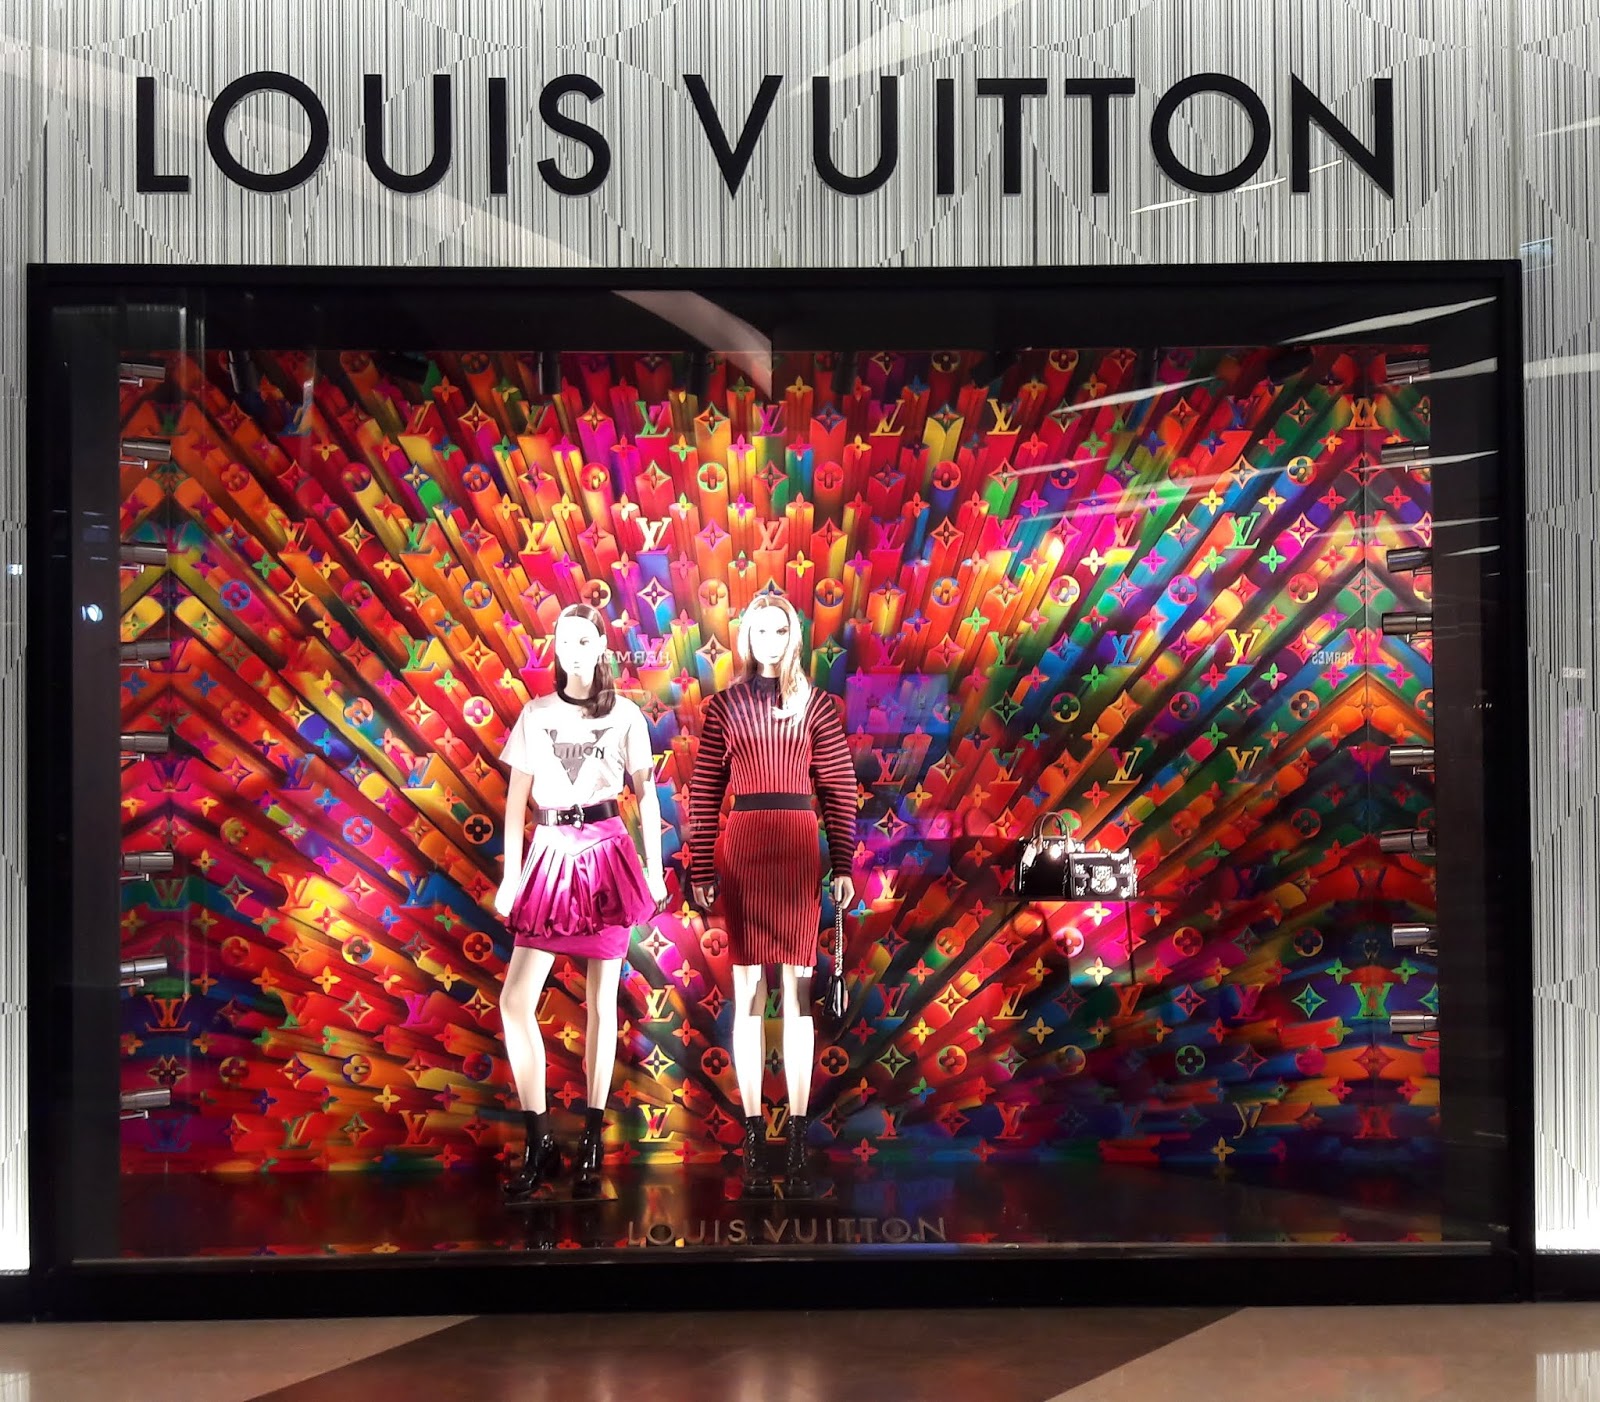 LOUIS VUITTON window display In Emporium Bangkok Thailand